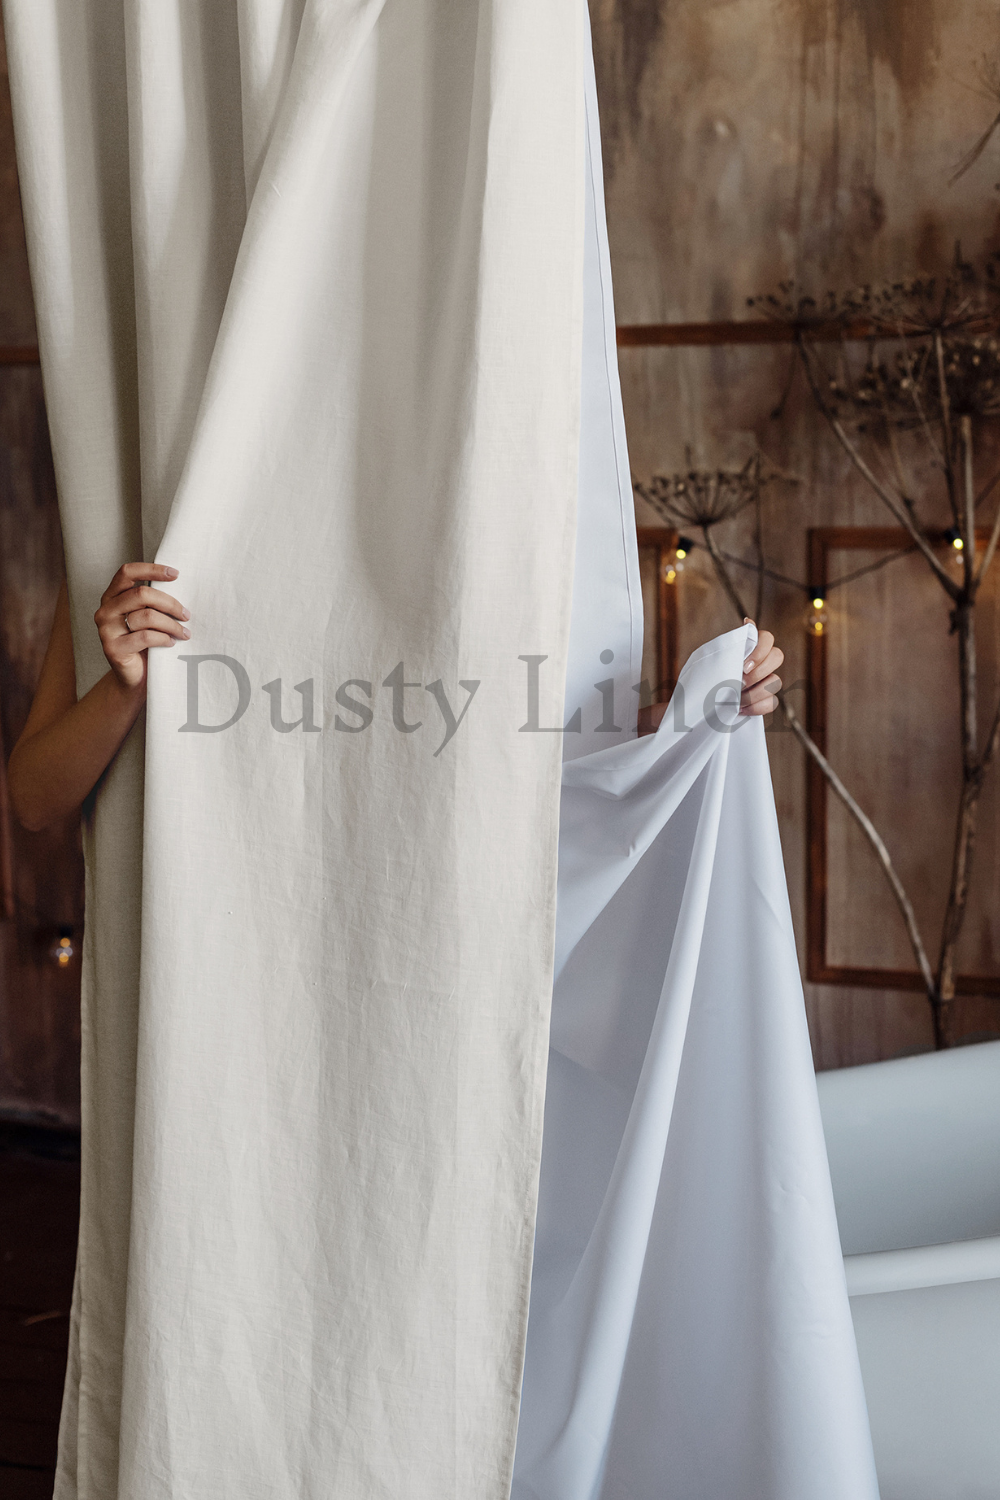 Rustic style a bathroom with a bathtub and a elegant shower curtain in Cream.